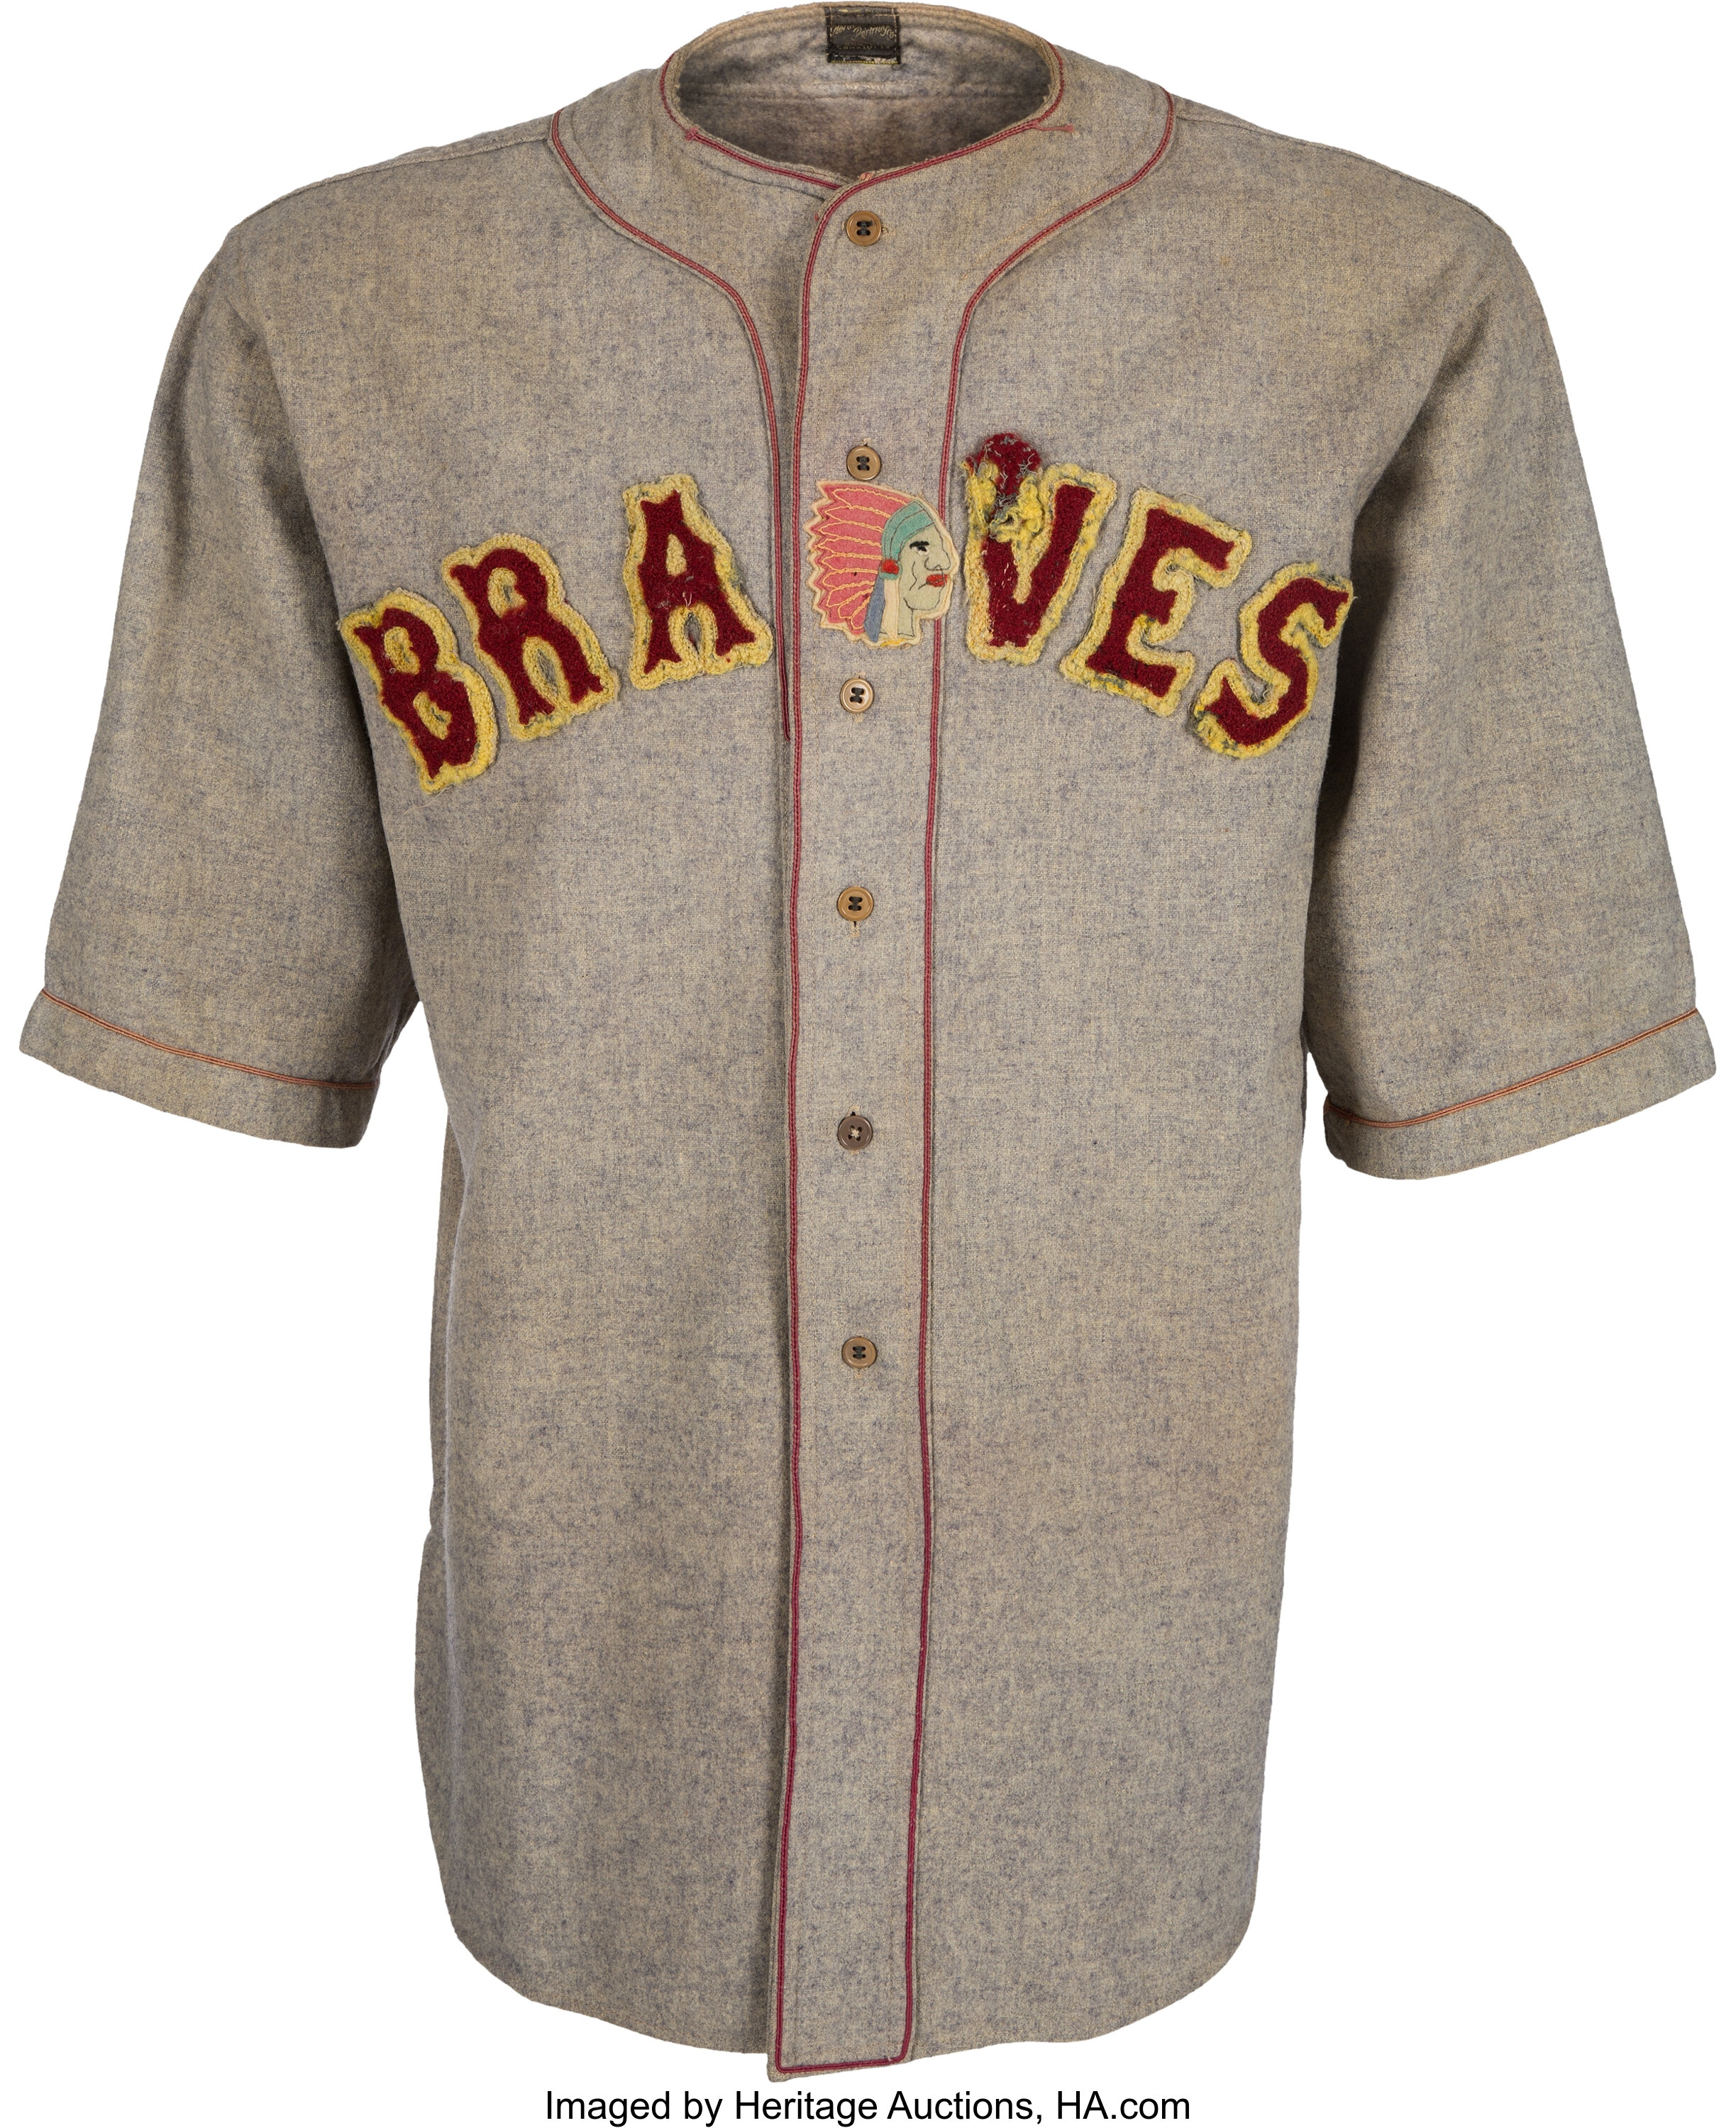 Boston Braves Vintage Apparel & Jerseys